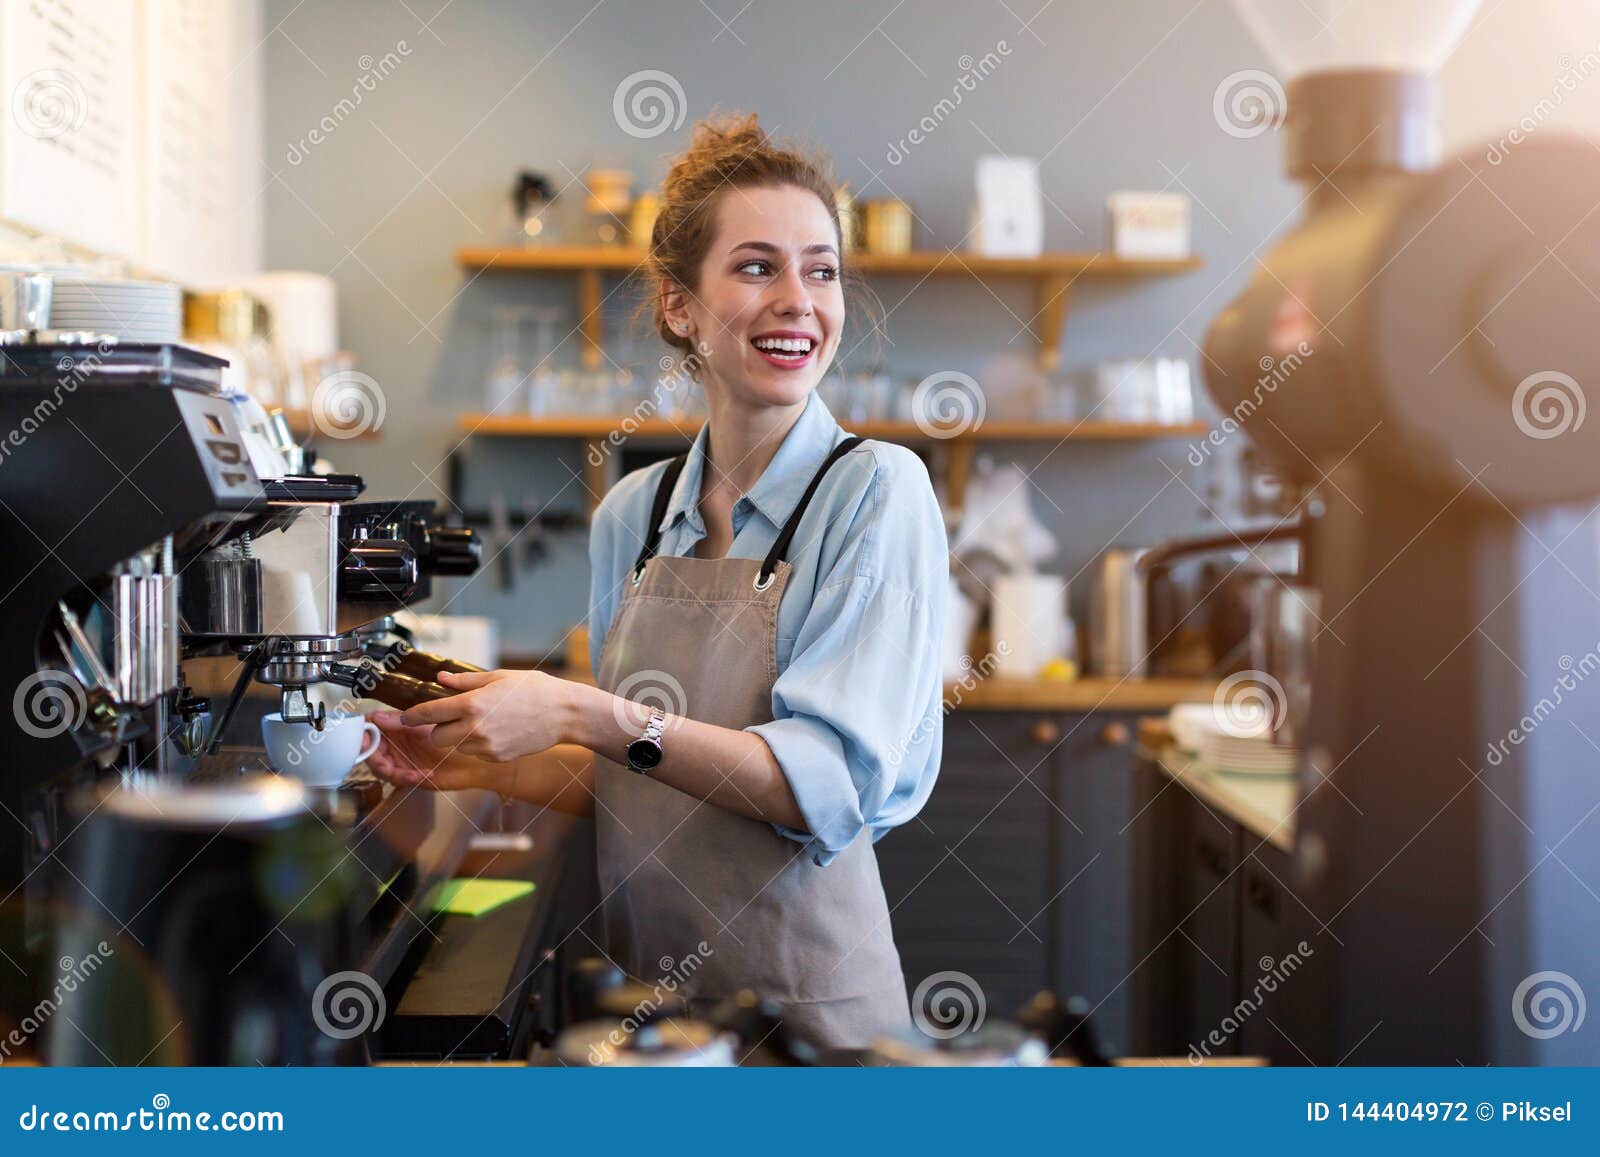 female barista making coffee